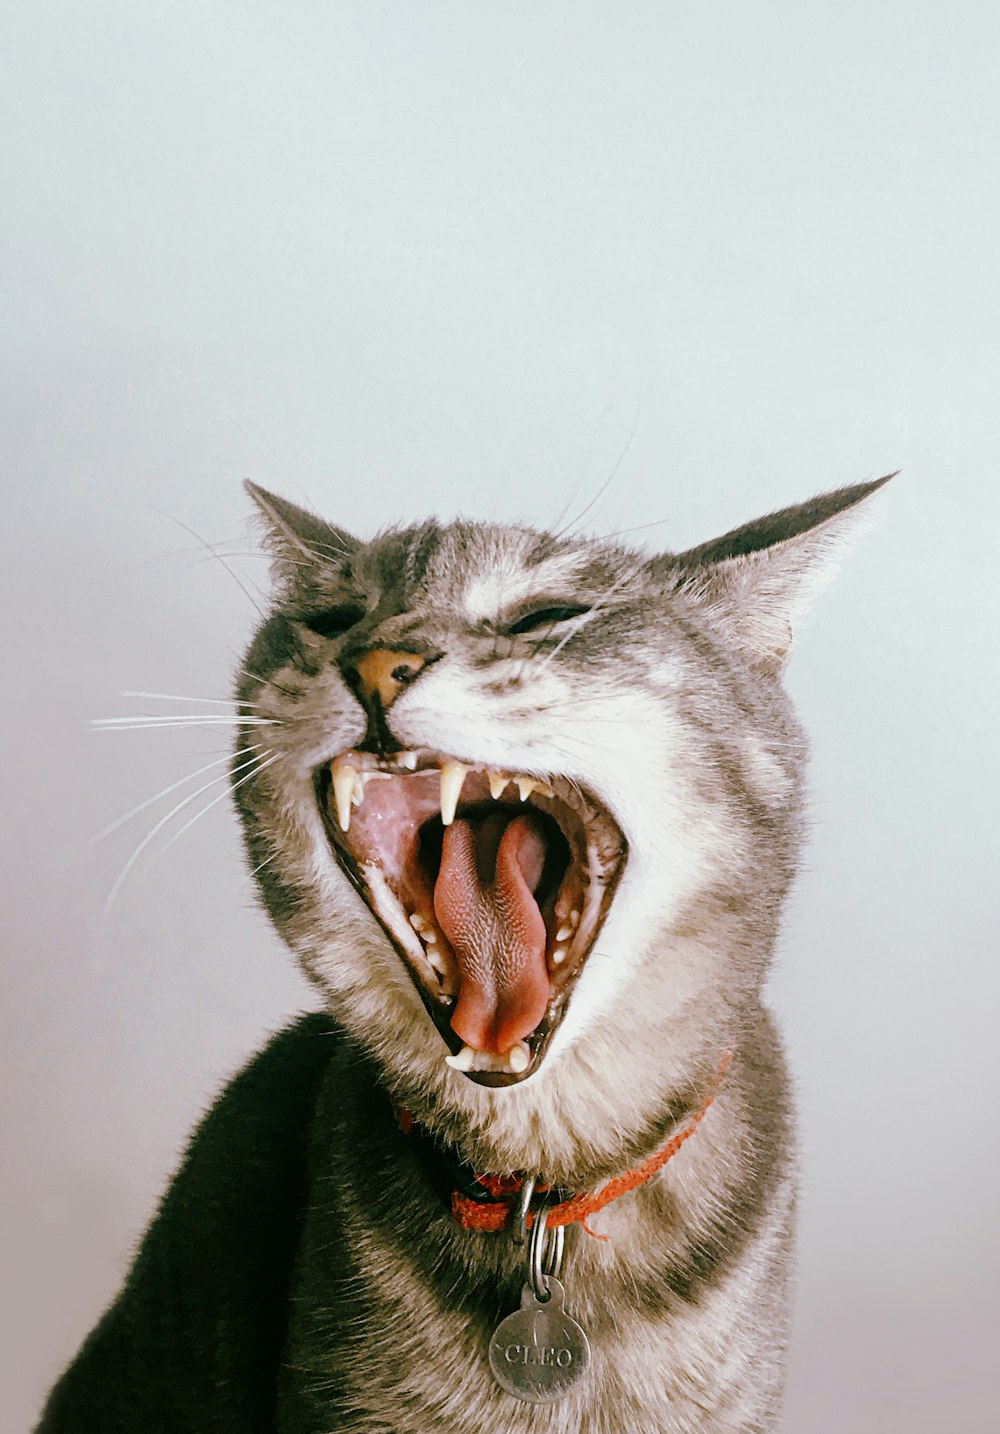 gato cinzento e branco com a boca aberta